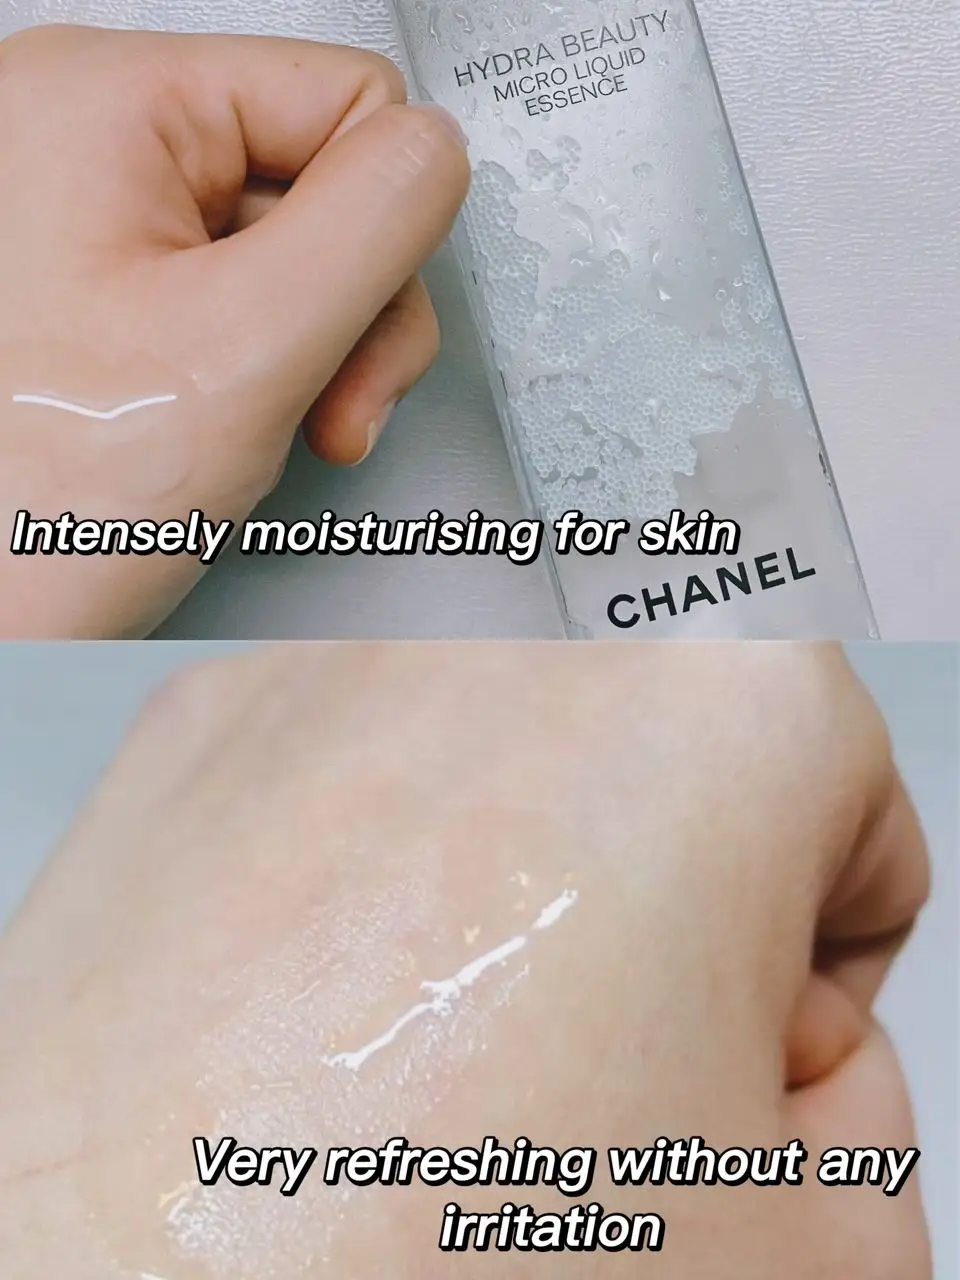 The Beauty Alchemist: Chanel Hydra Beauty Micro Liquid Essence